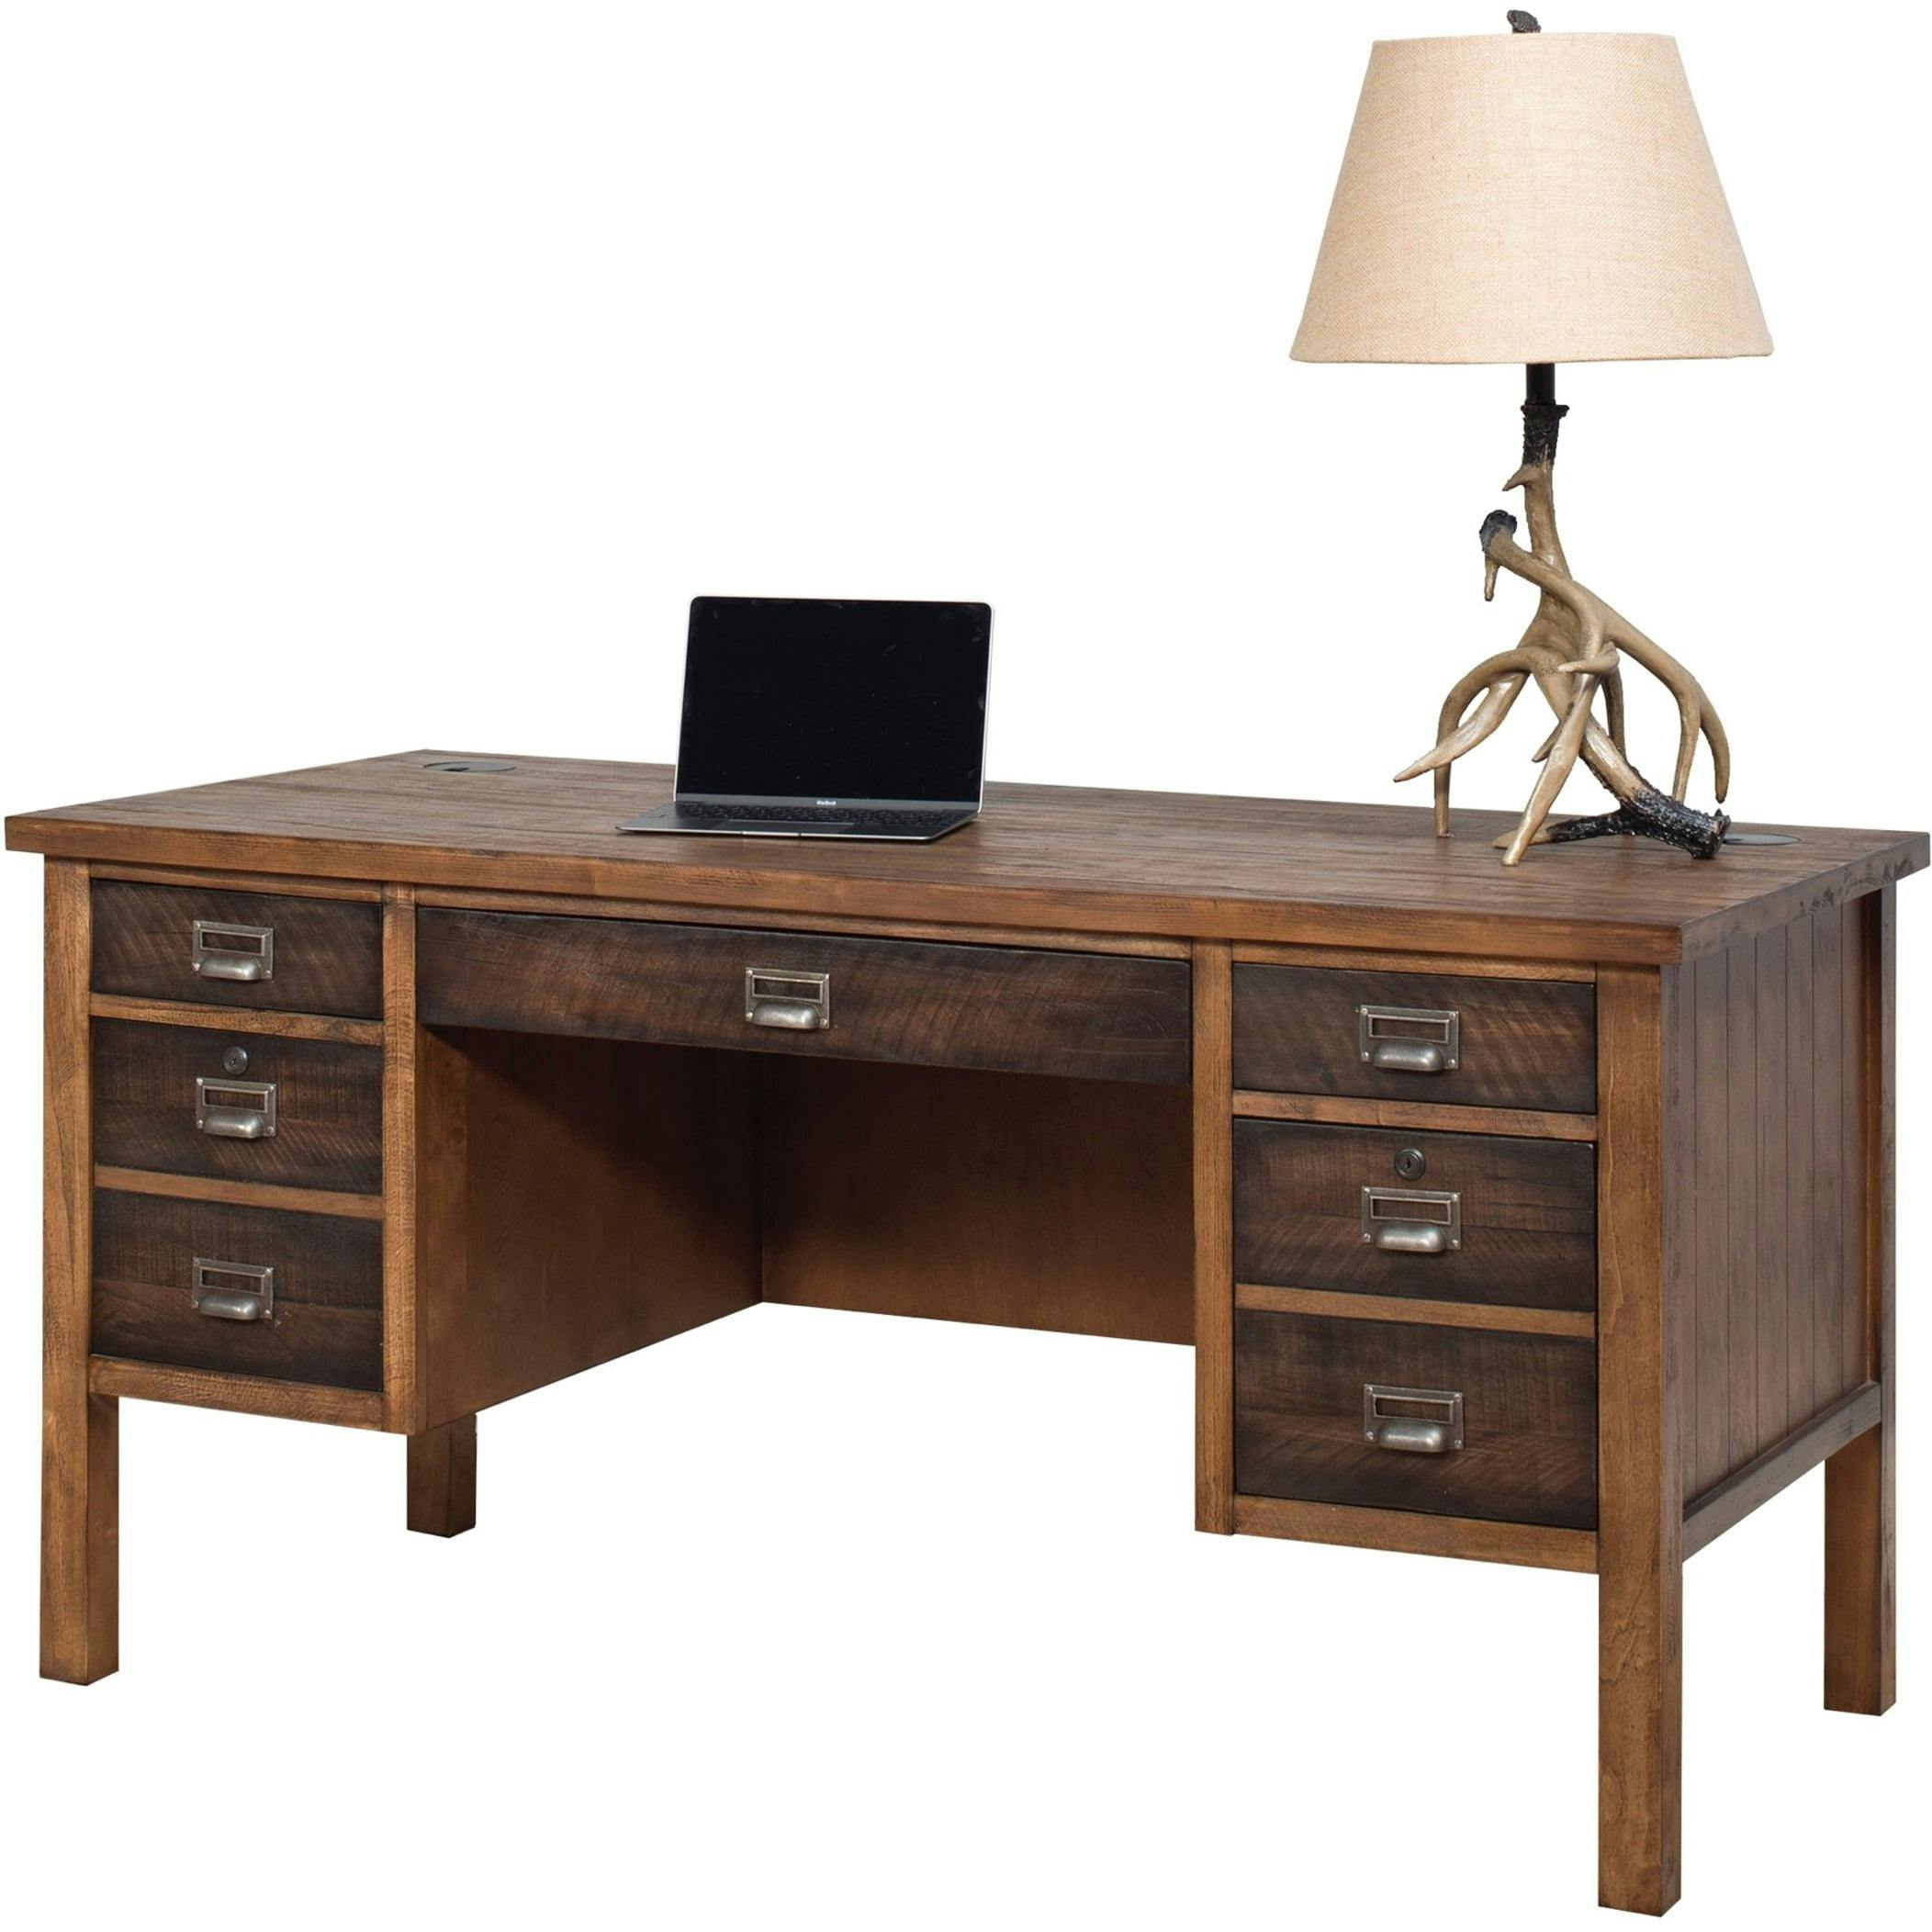 Heritage Half Pedestal Desk with Utility Drawers in Rustic Brown